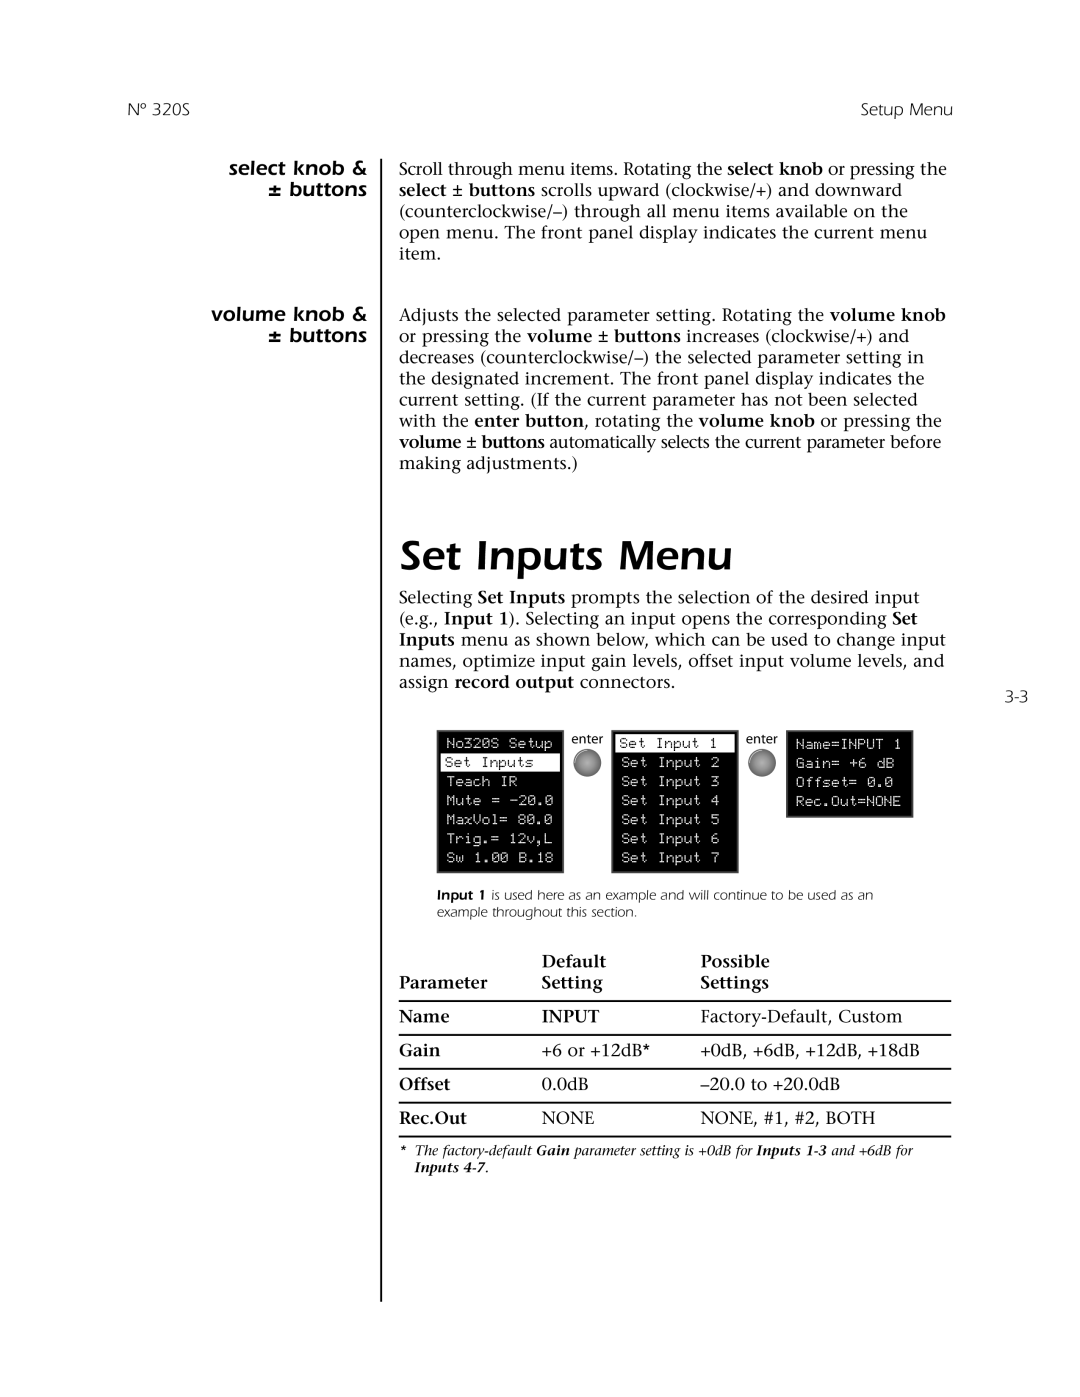 Mark Levinson N 320S Set Inputs Menu, select knob & ± buttons volume knob & ± buttons, Default, Possible, Parameter, Name 